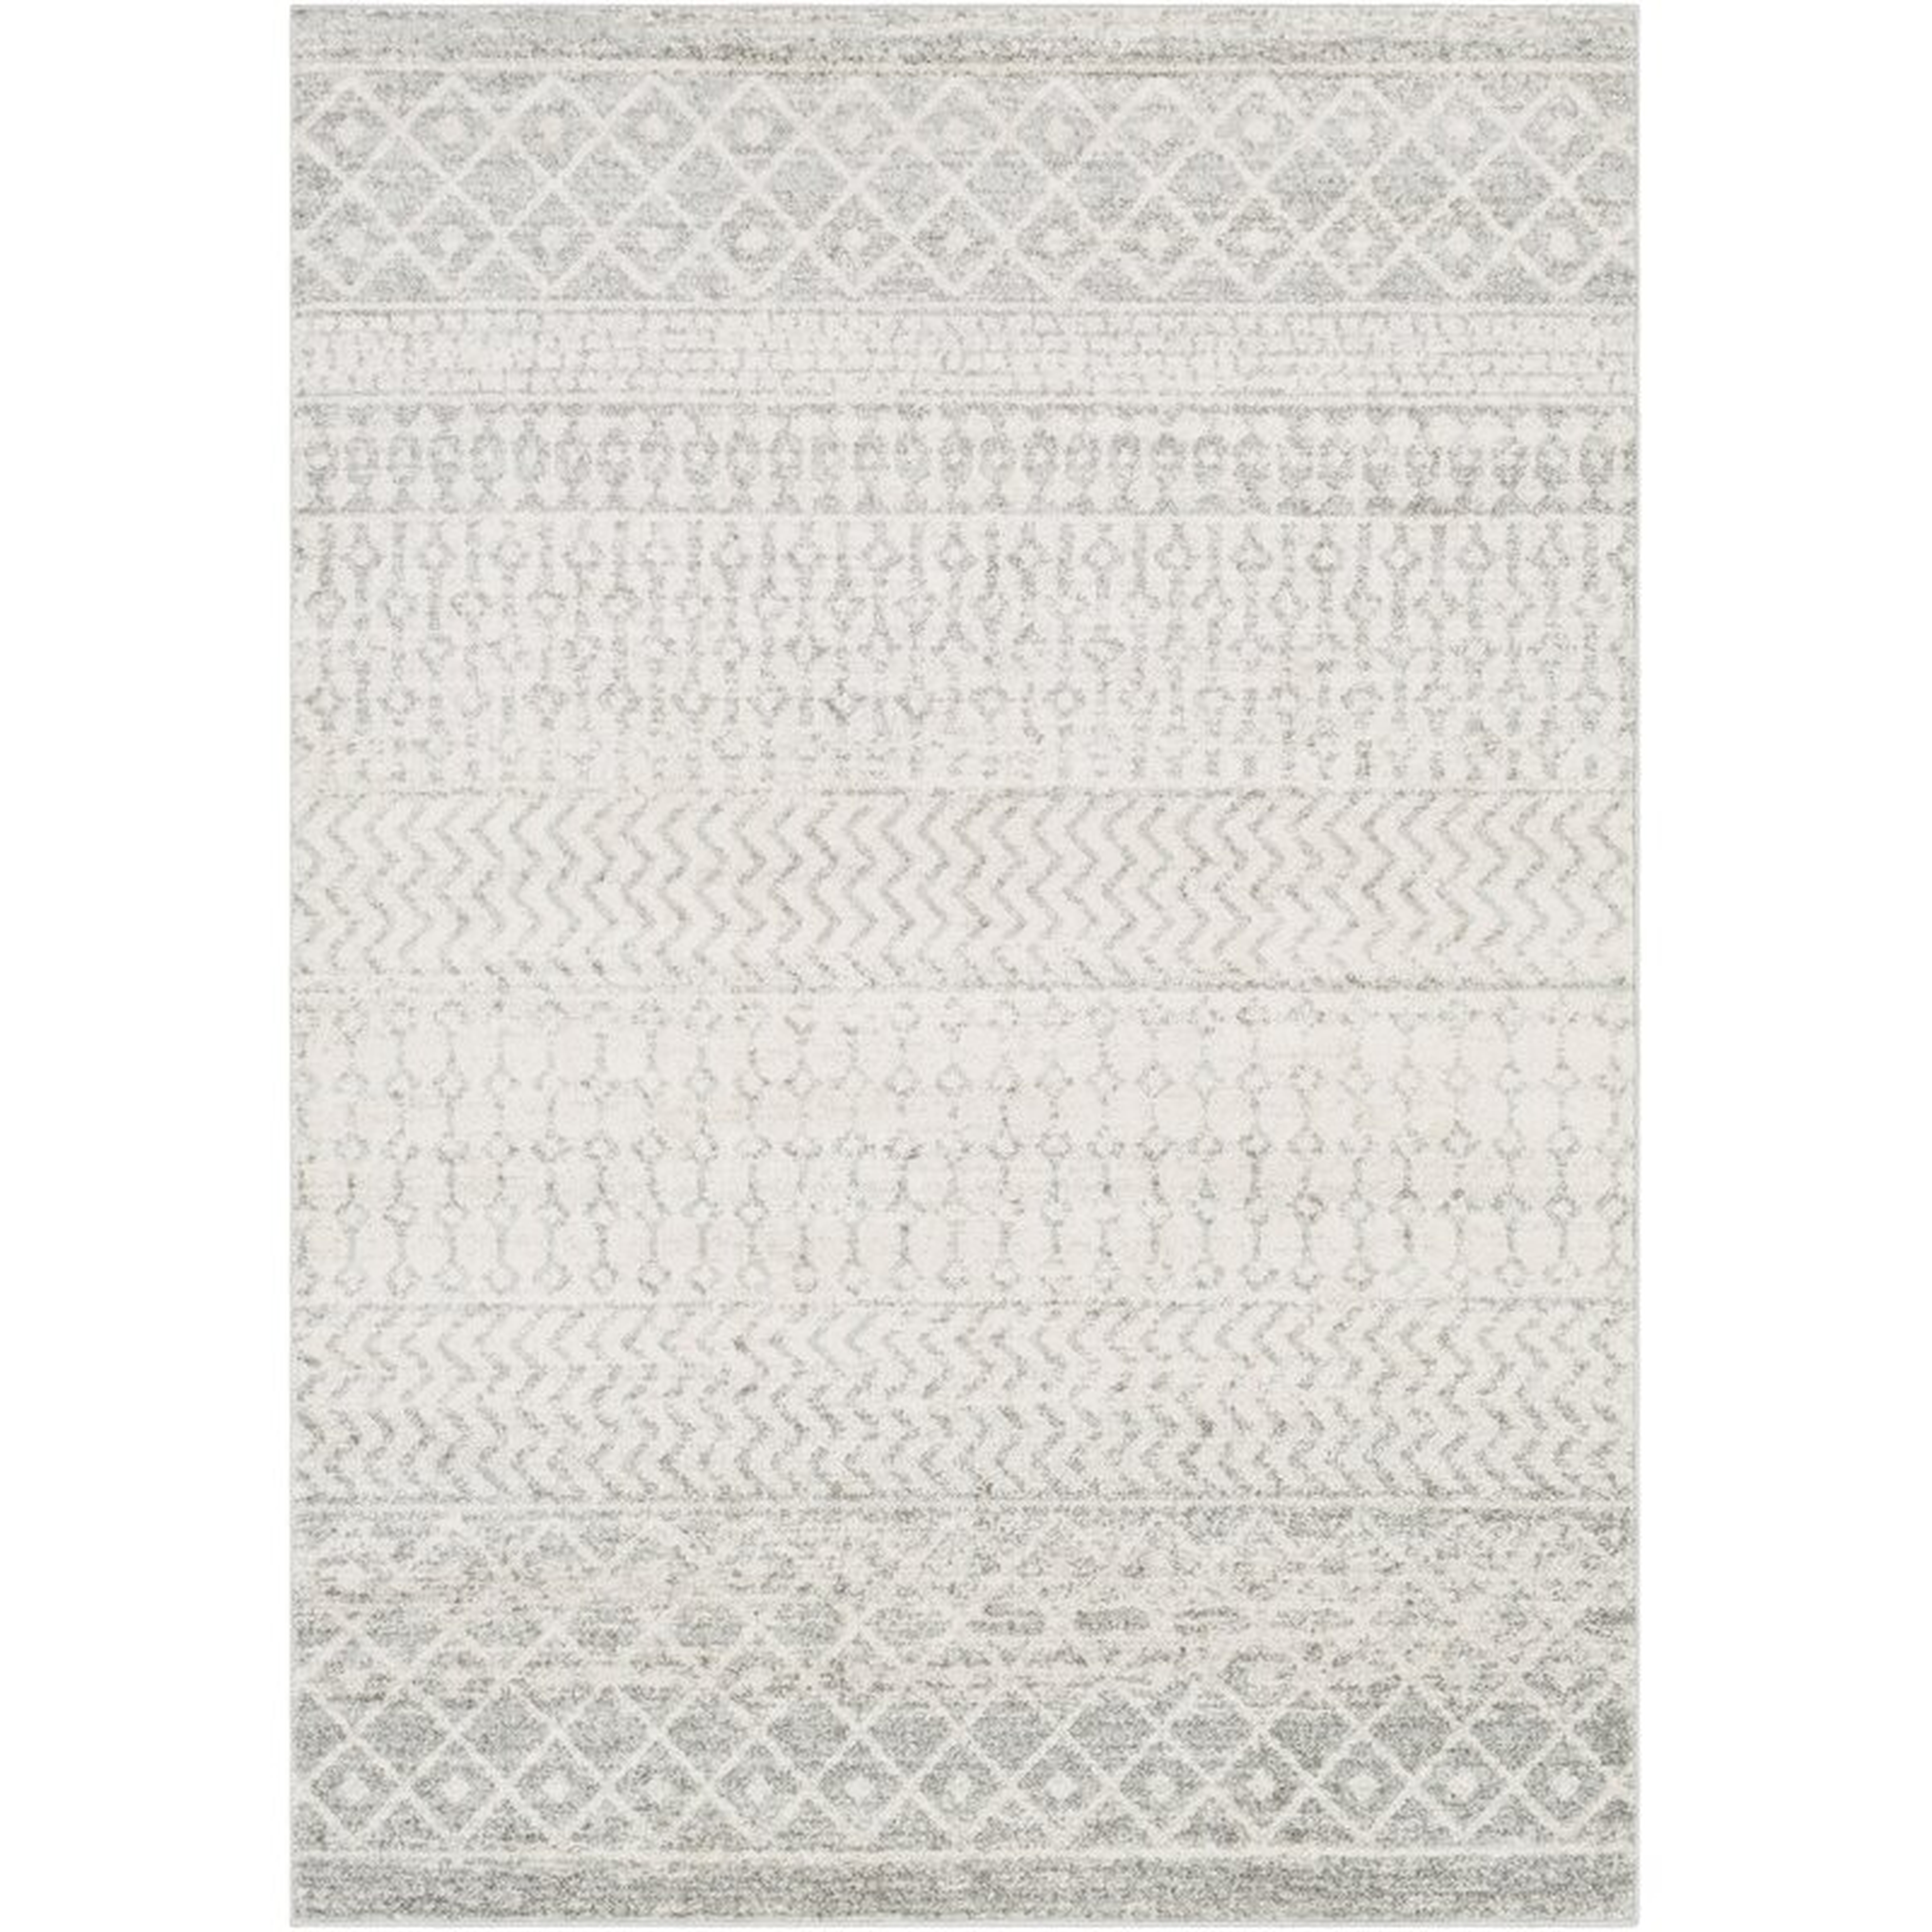 Kenmore Geometric Area Rug, Gray & White, 7'10" x 10'3" - Wayfair